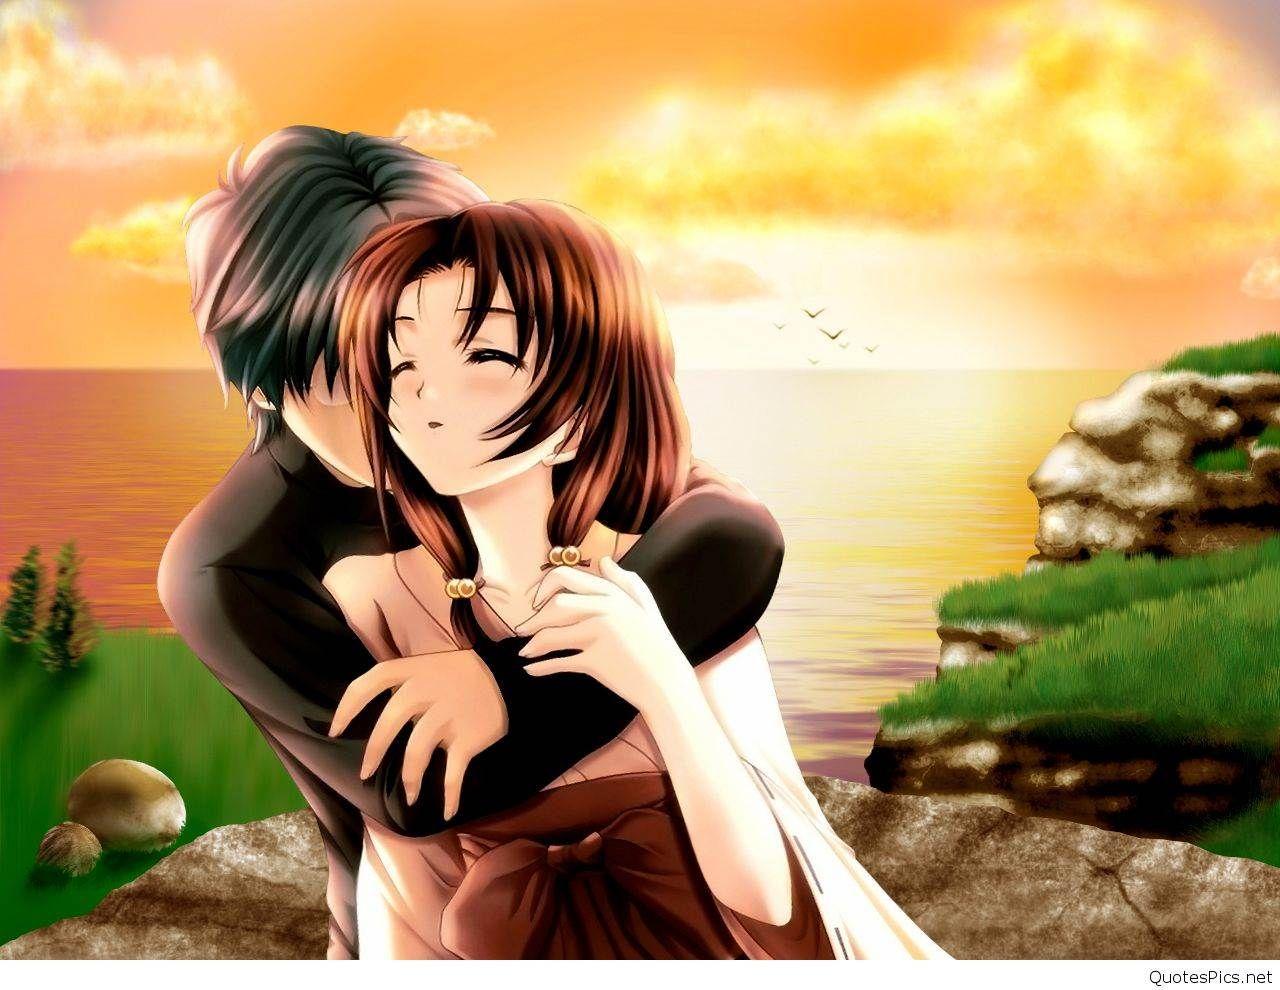 Romantic love couple cartoon wallpaper \uamp; picture 1280×990